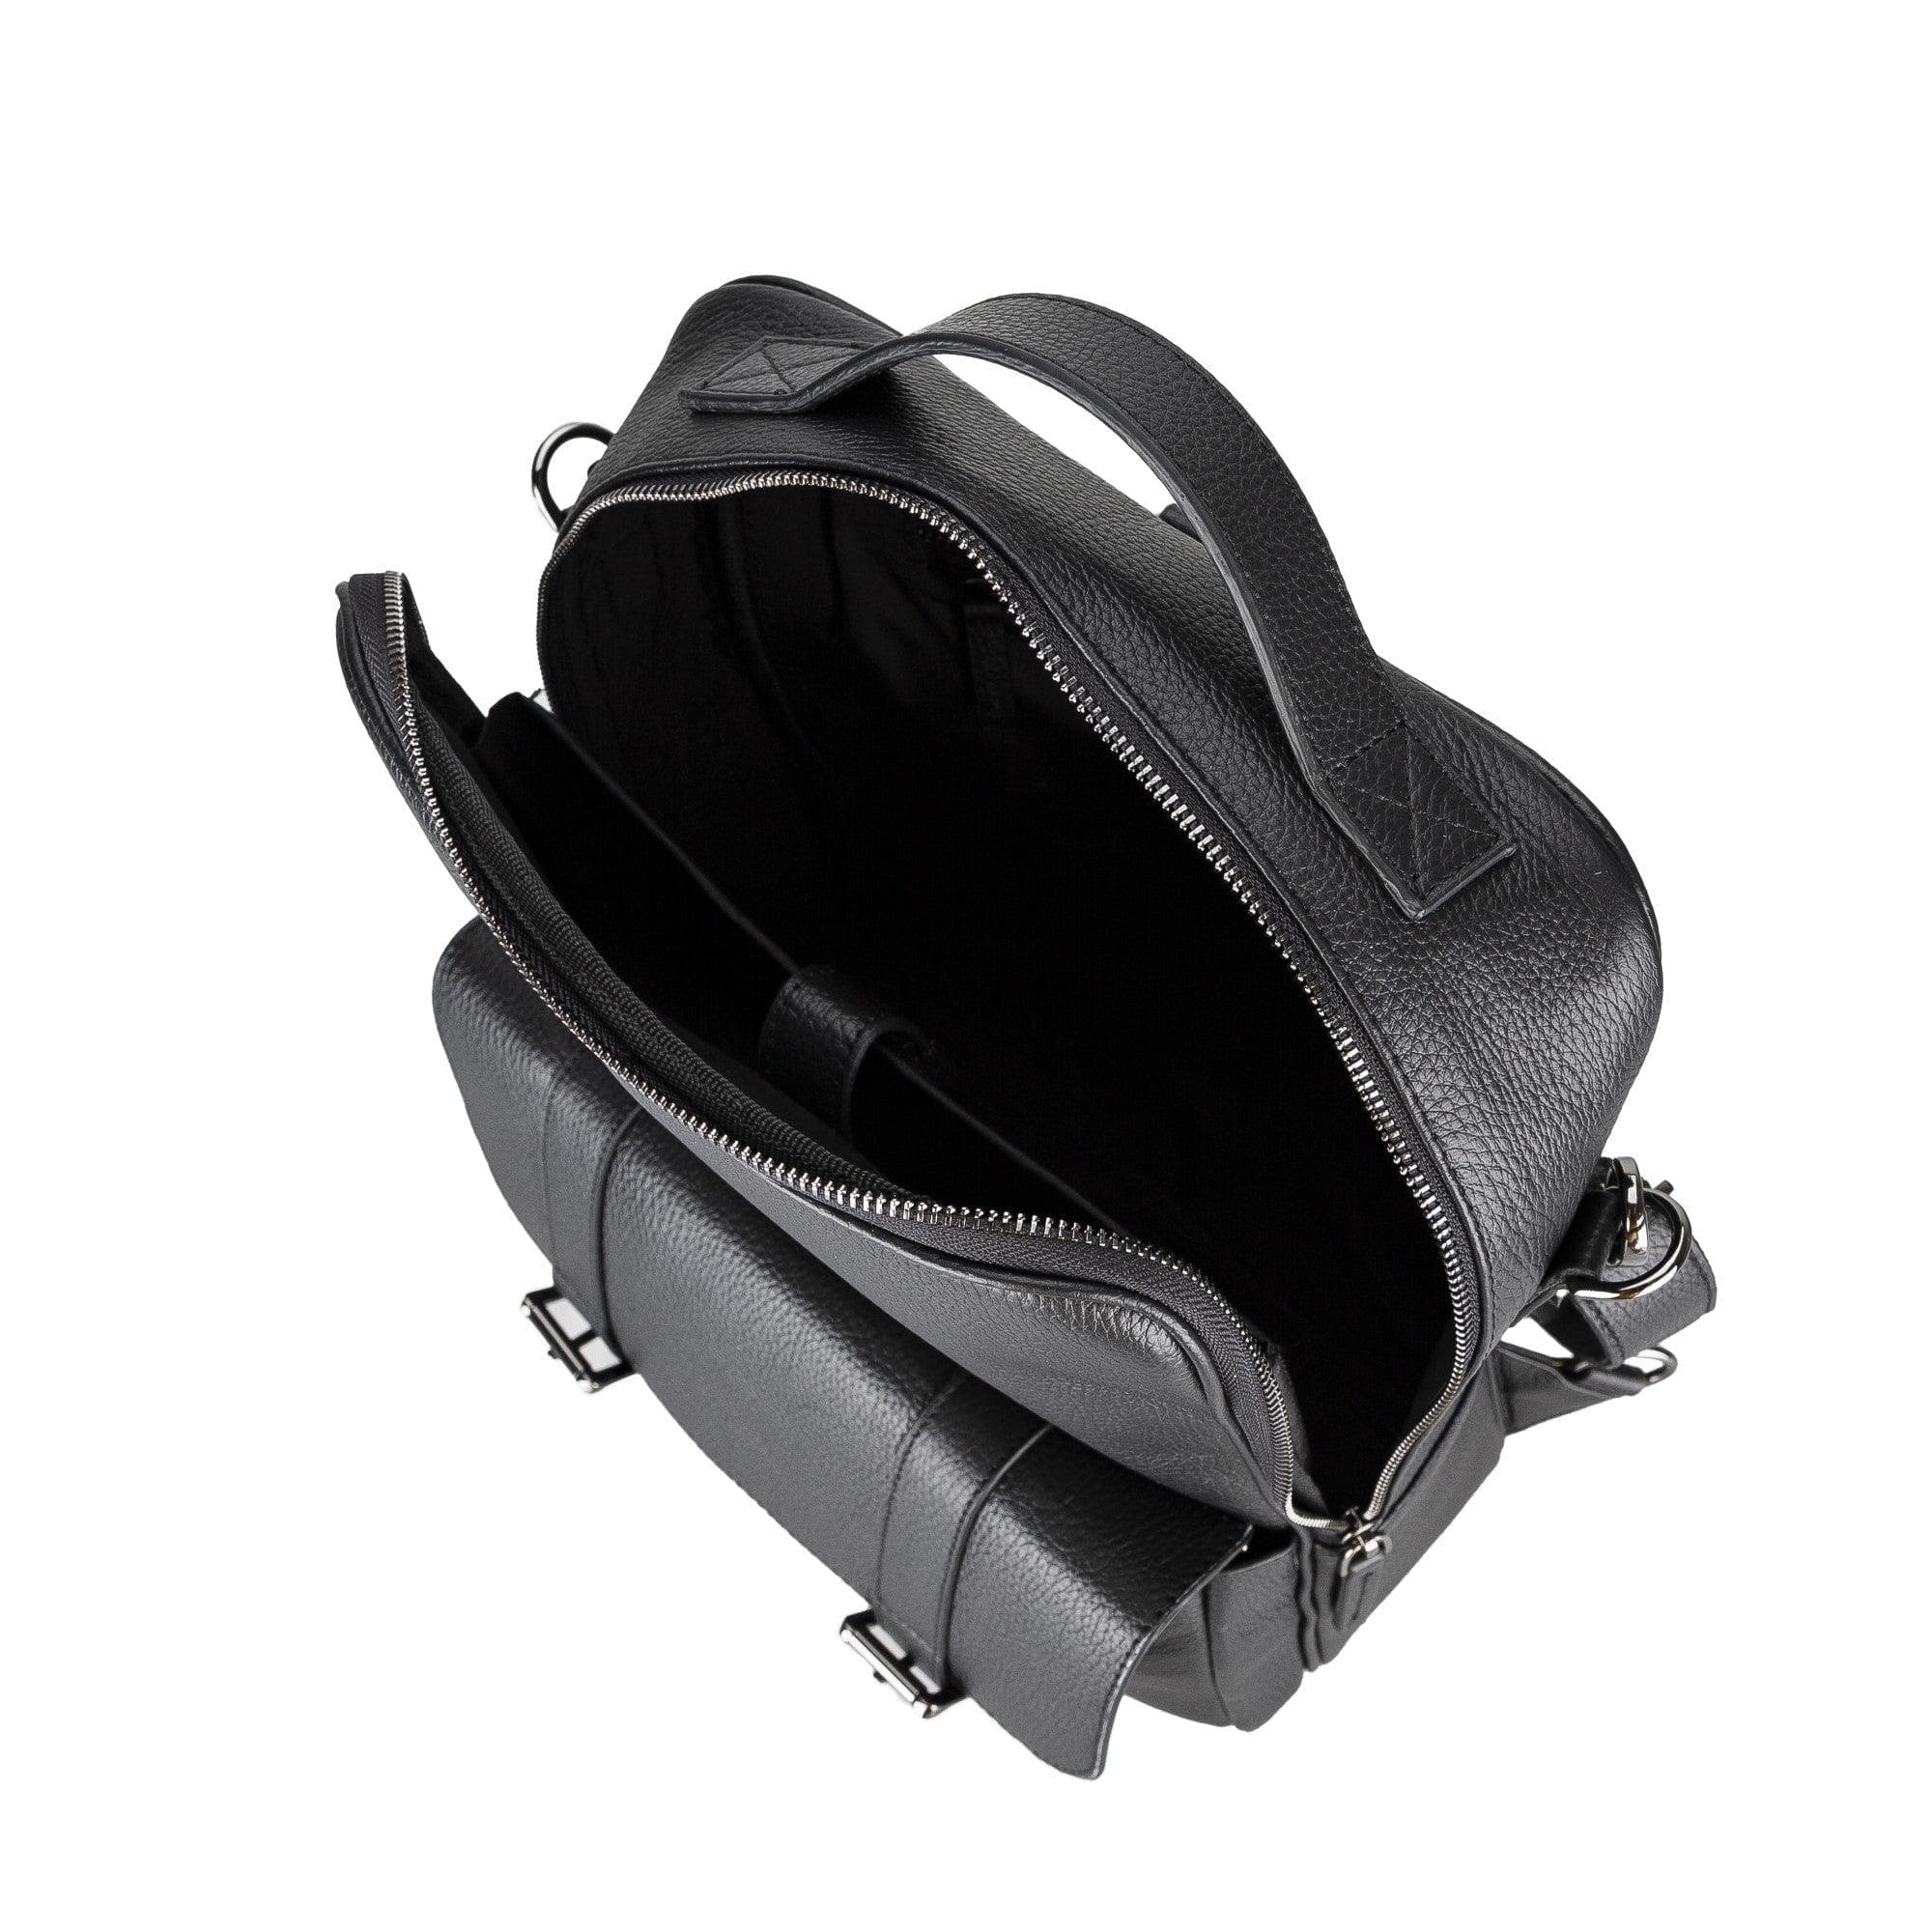 Molde Unisex Genuine Leather Backpack for Daily Life or Laptop / MacBook Black Bouletta LTD